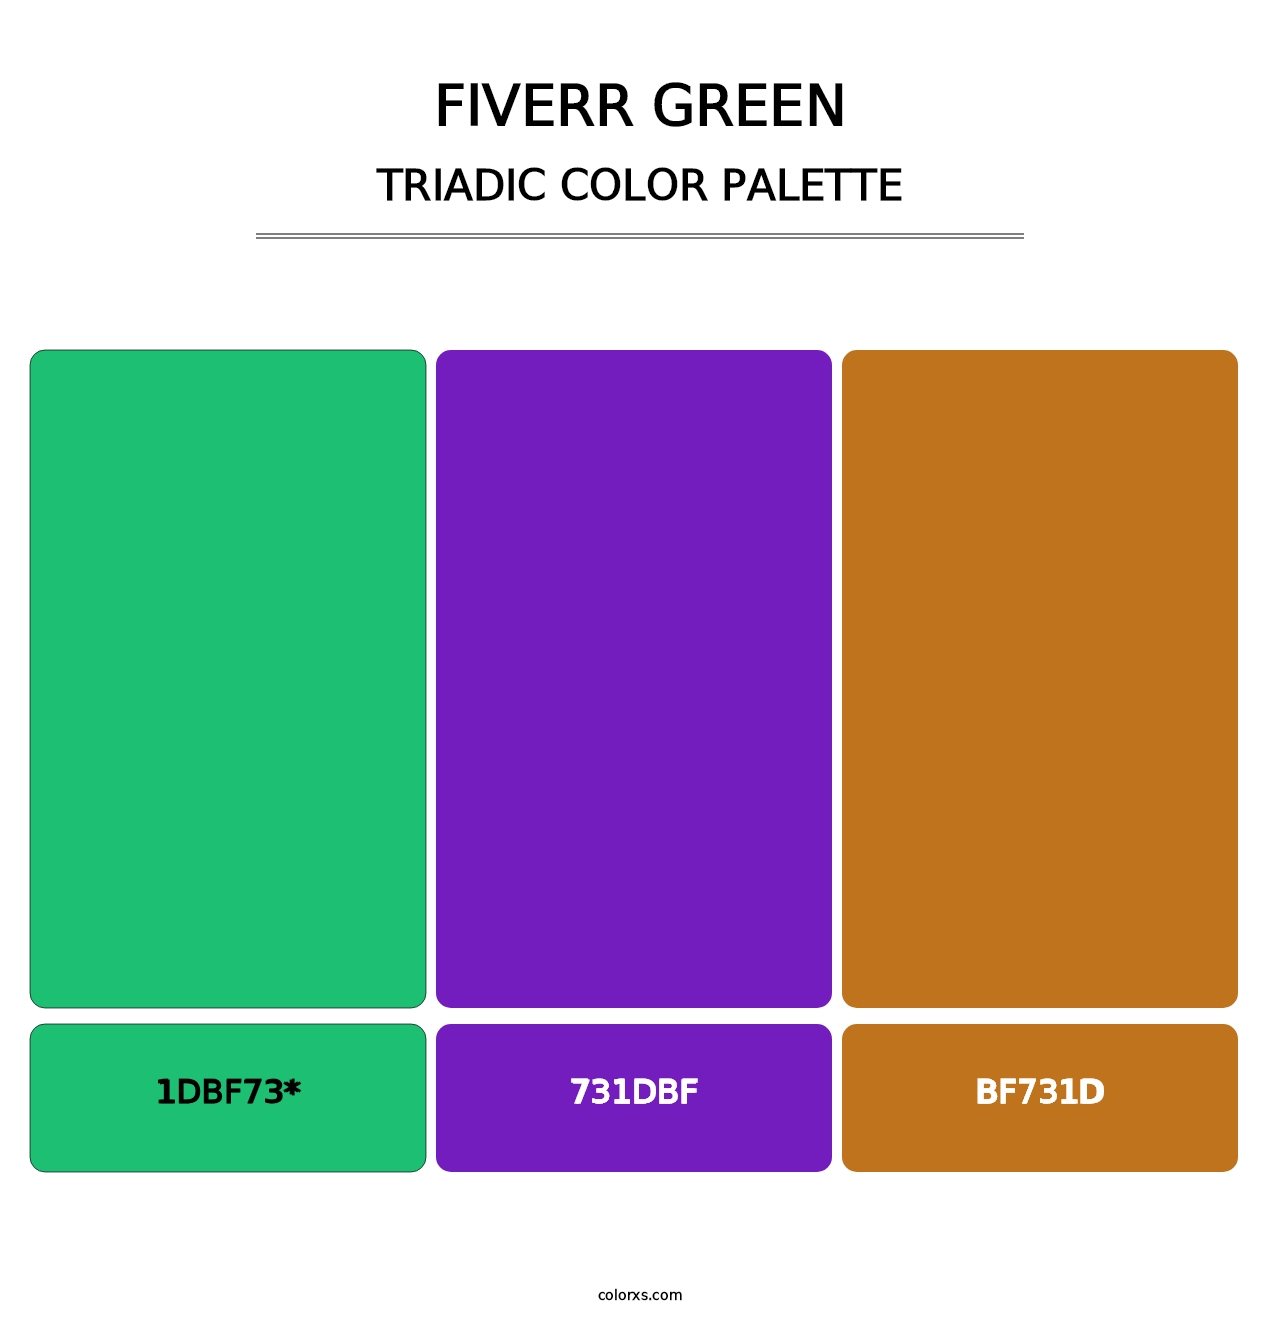 Fiverr Green - Triadic Color Palette